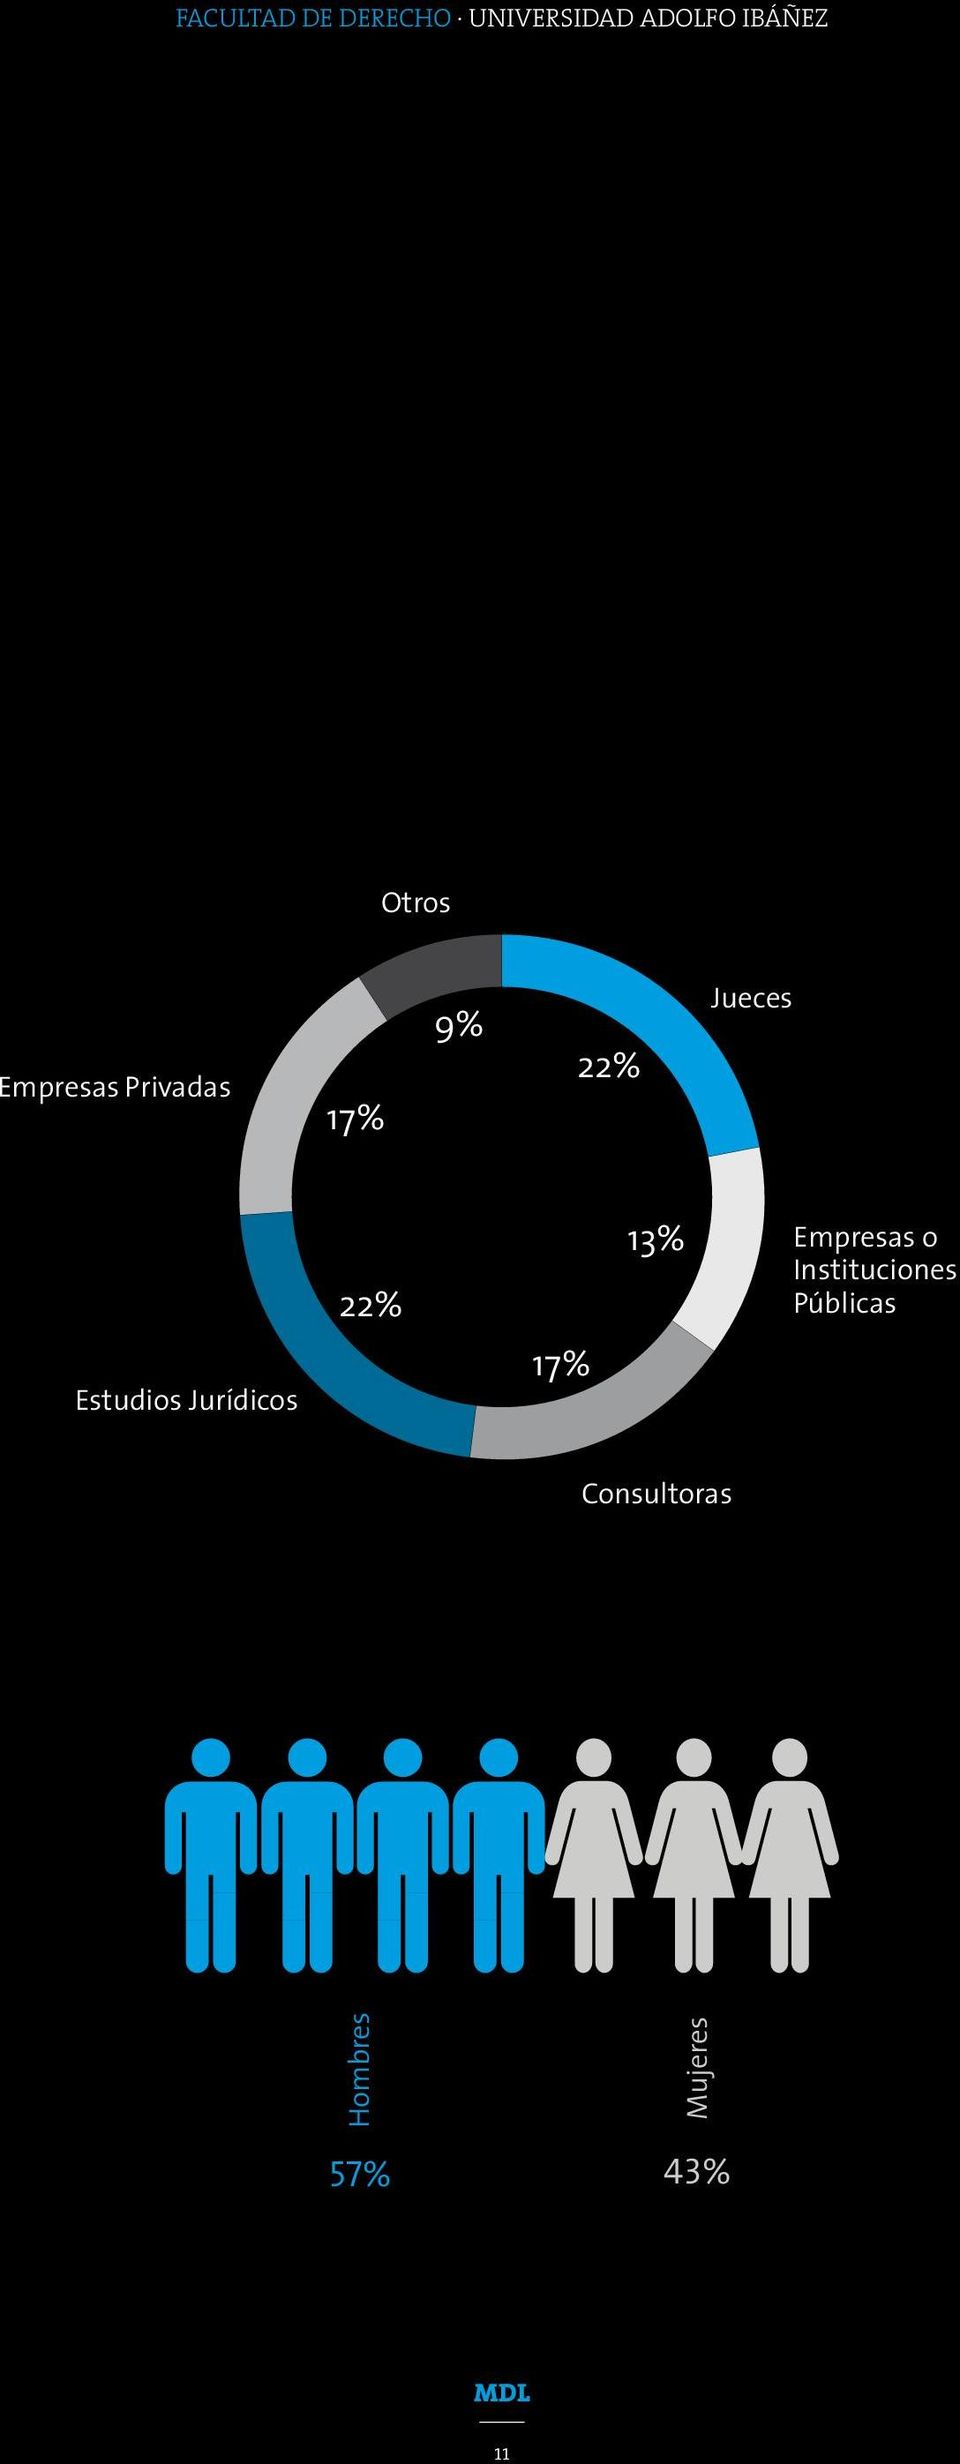 13% Empresas o Instituciones Públicas Estudios